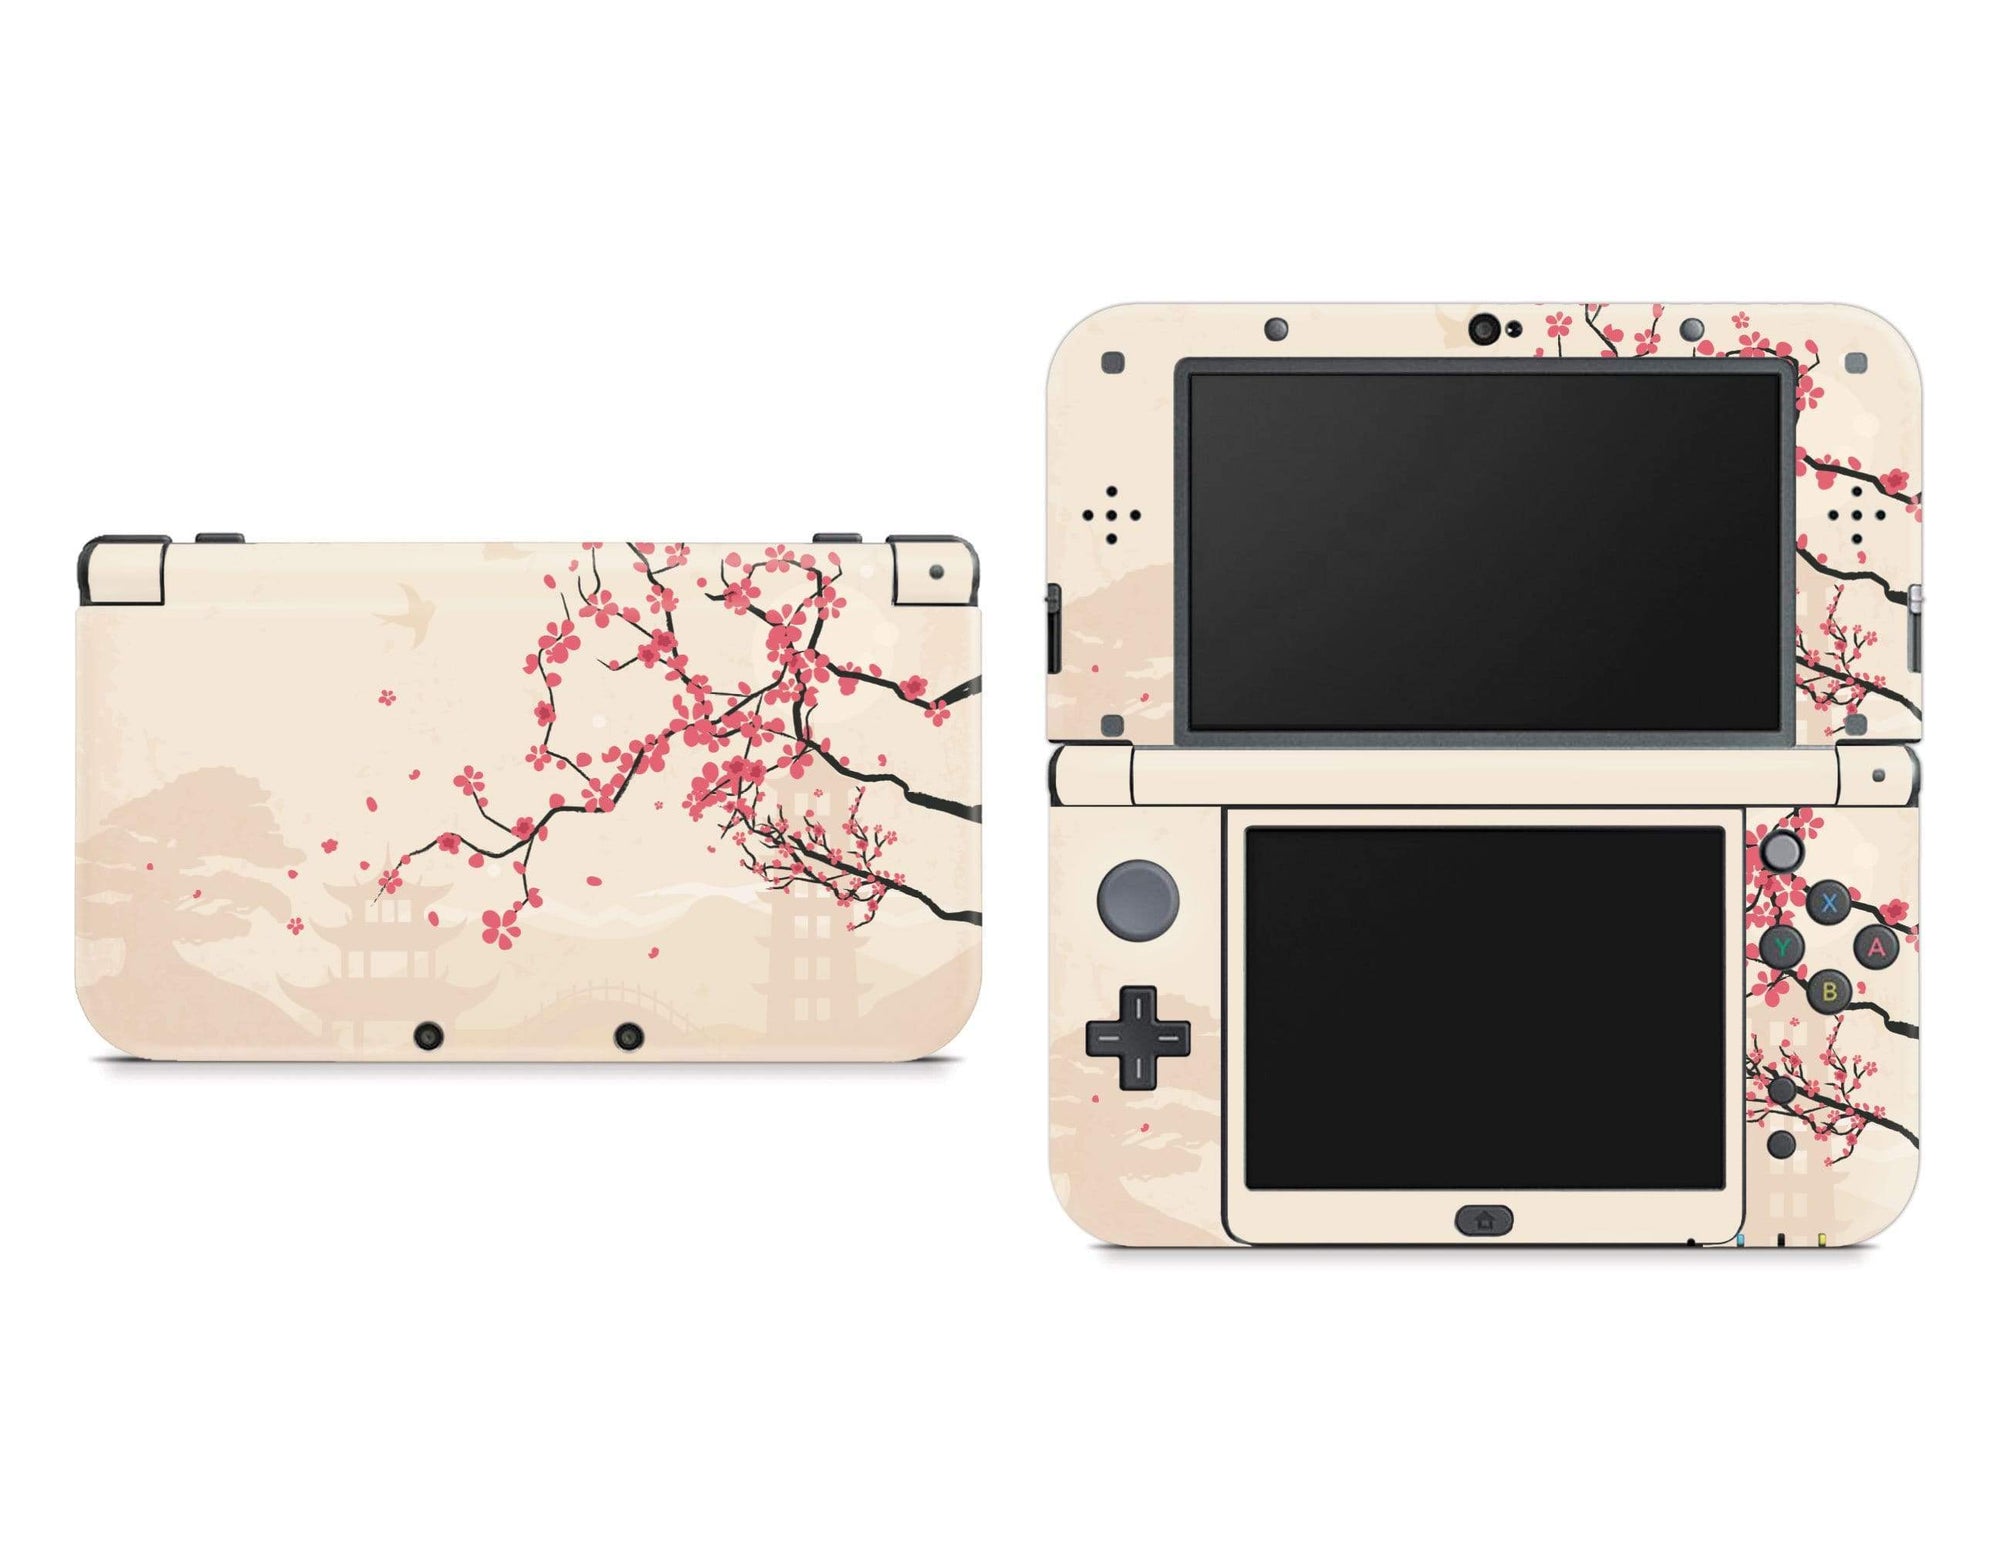 Sakura Blossoms Nintendo New 3DS XL Skin